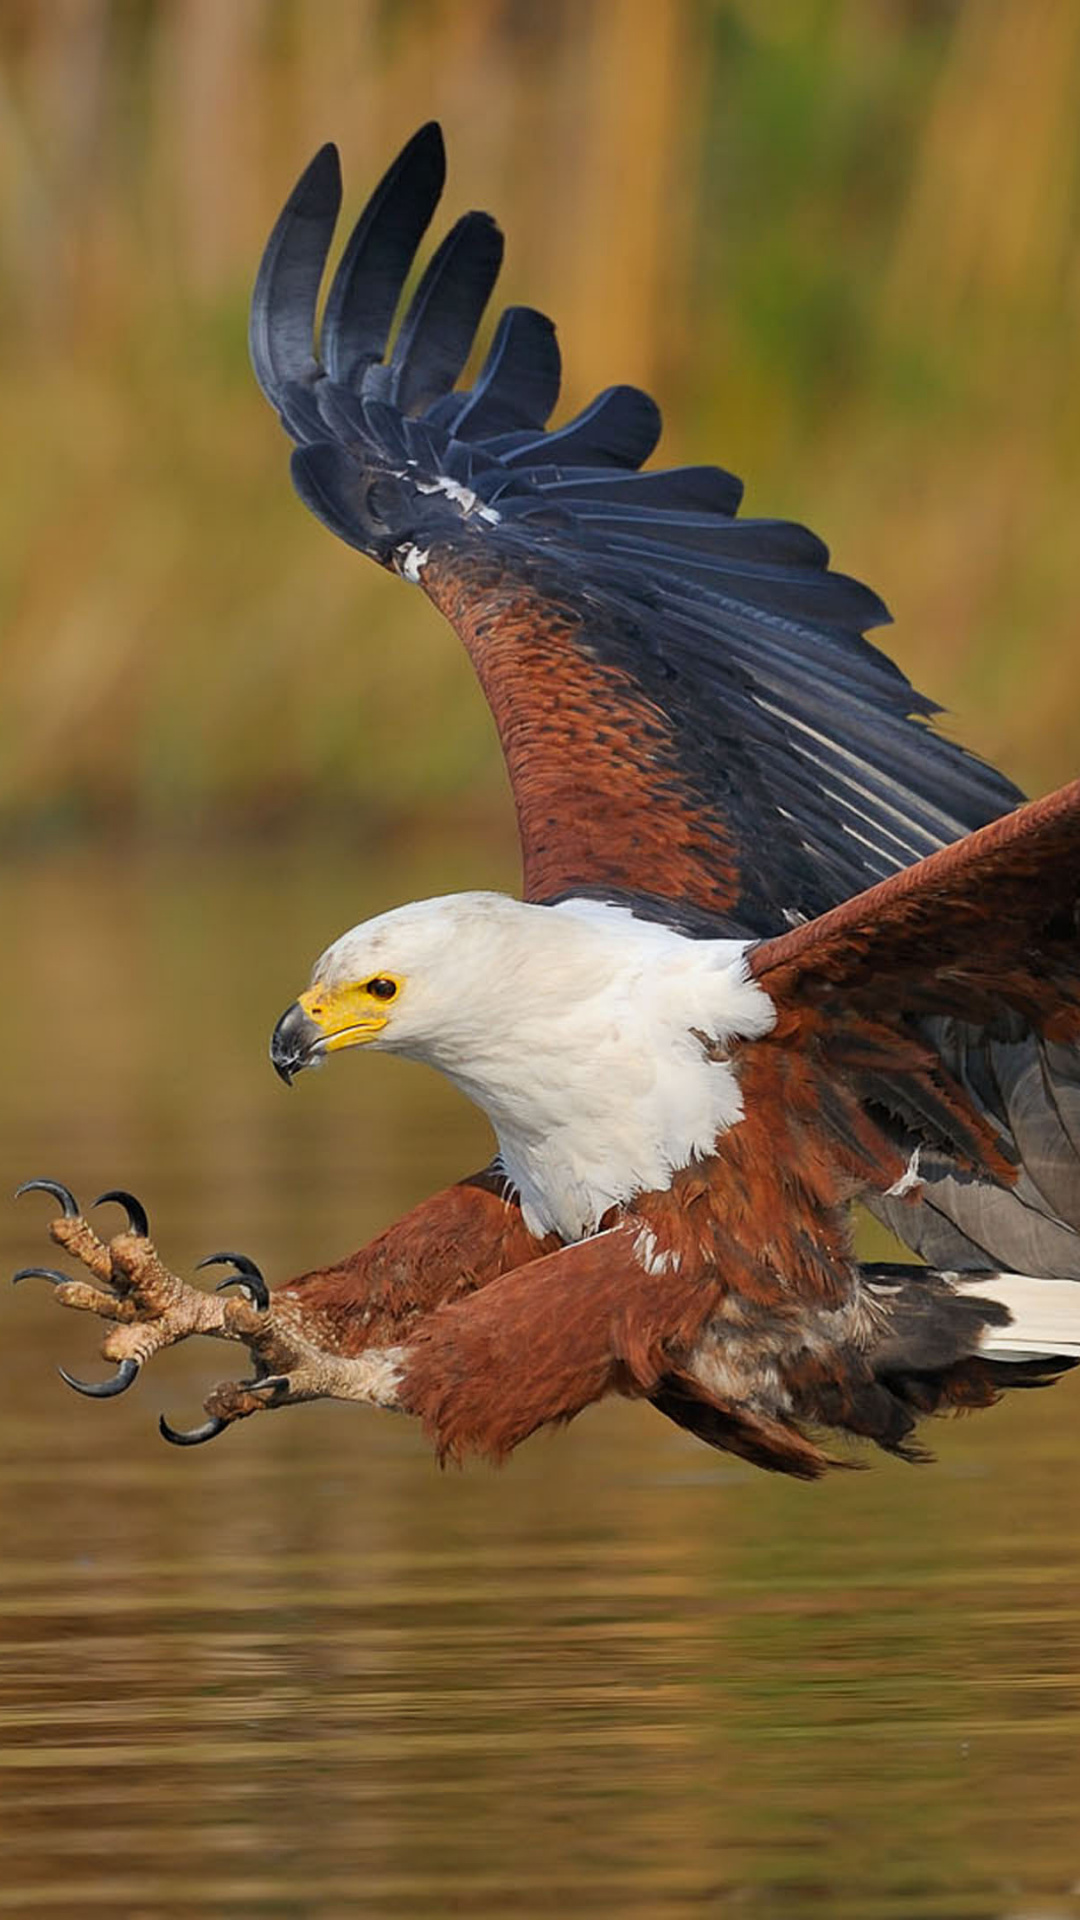 Africa, Oryol, Bird Of Prey, Accipitriformes, Eagle - Eagle Cover Photo Facebook , HD Wallpaper & Backgrounds